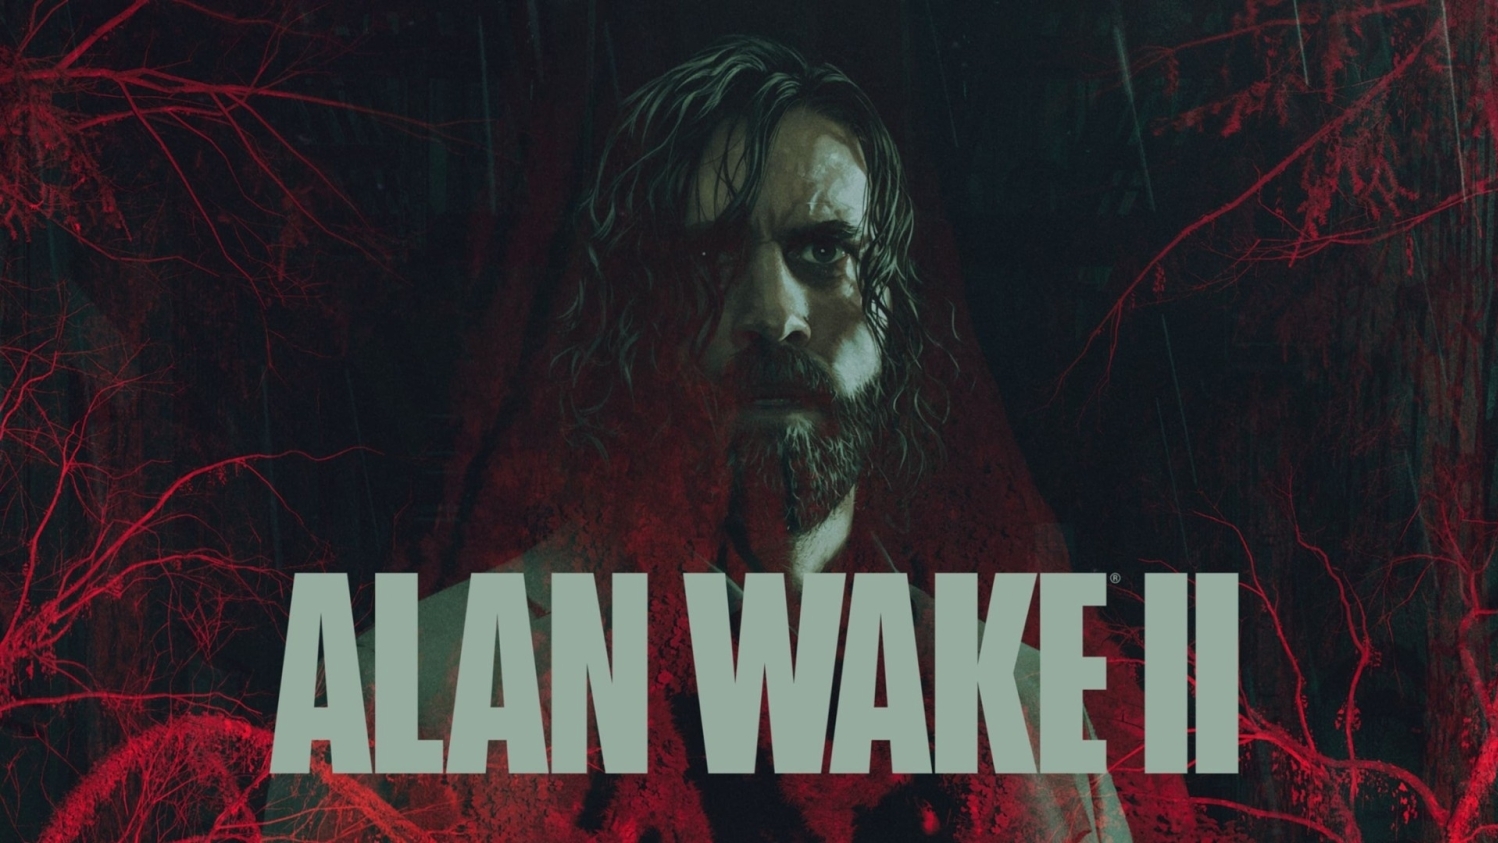 Alan Wake 2 on Xbox Series X improves on PS5 performance